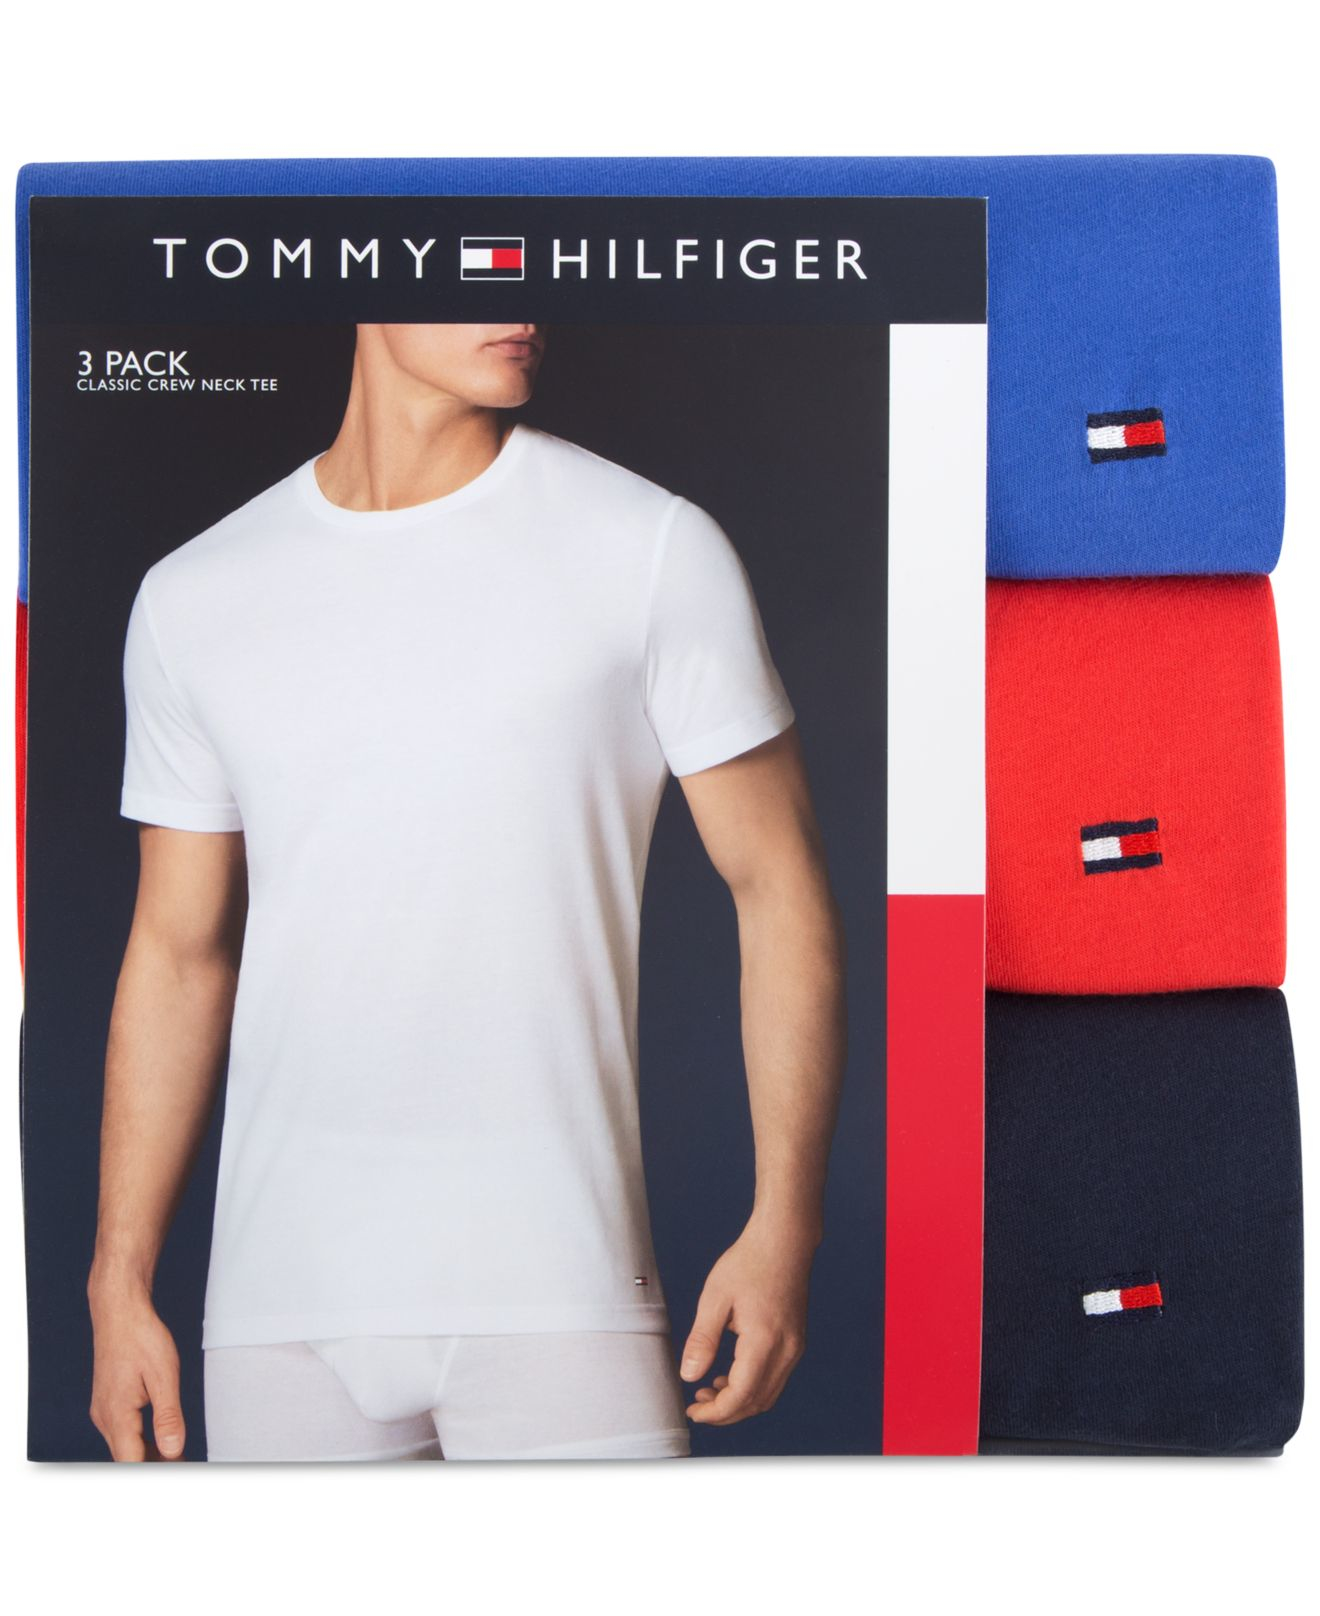 tommy hilfiger shirt pack